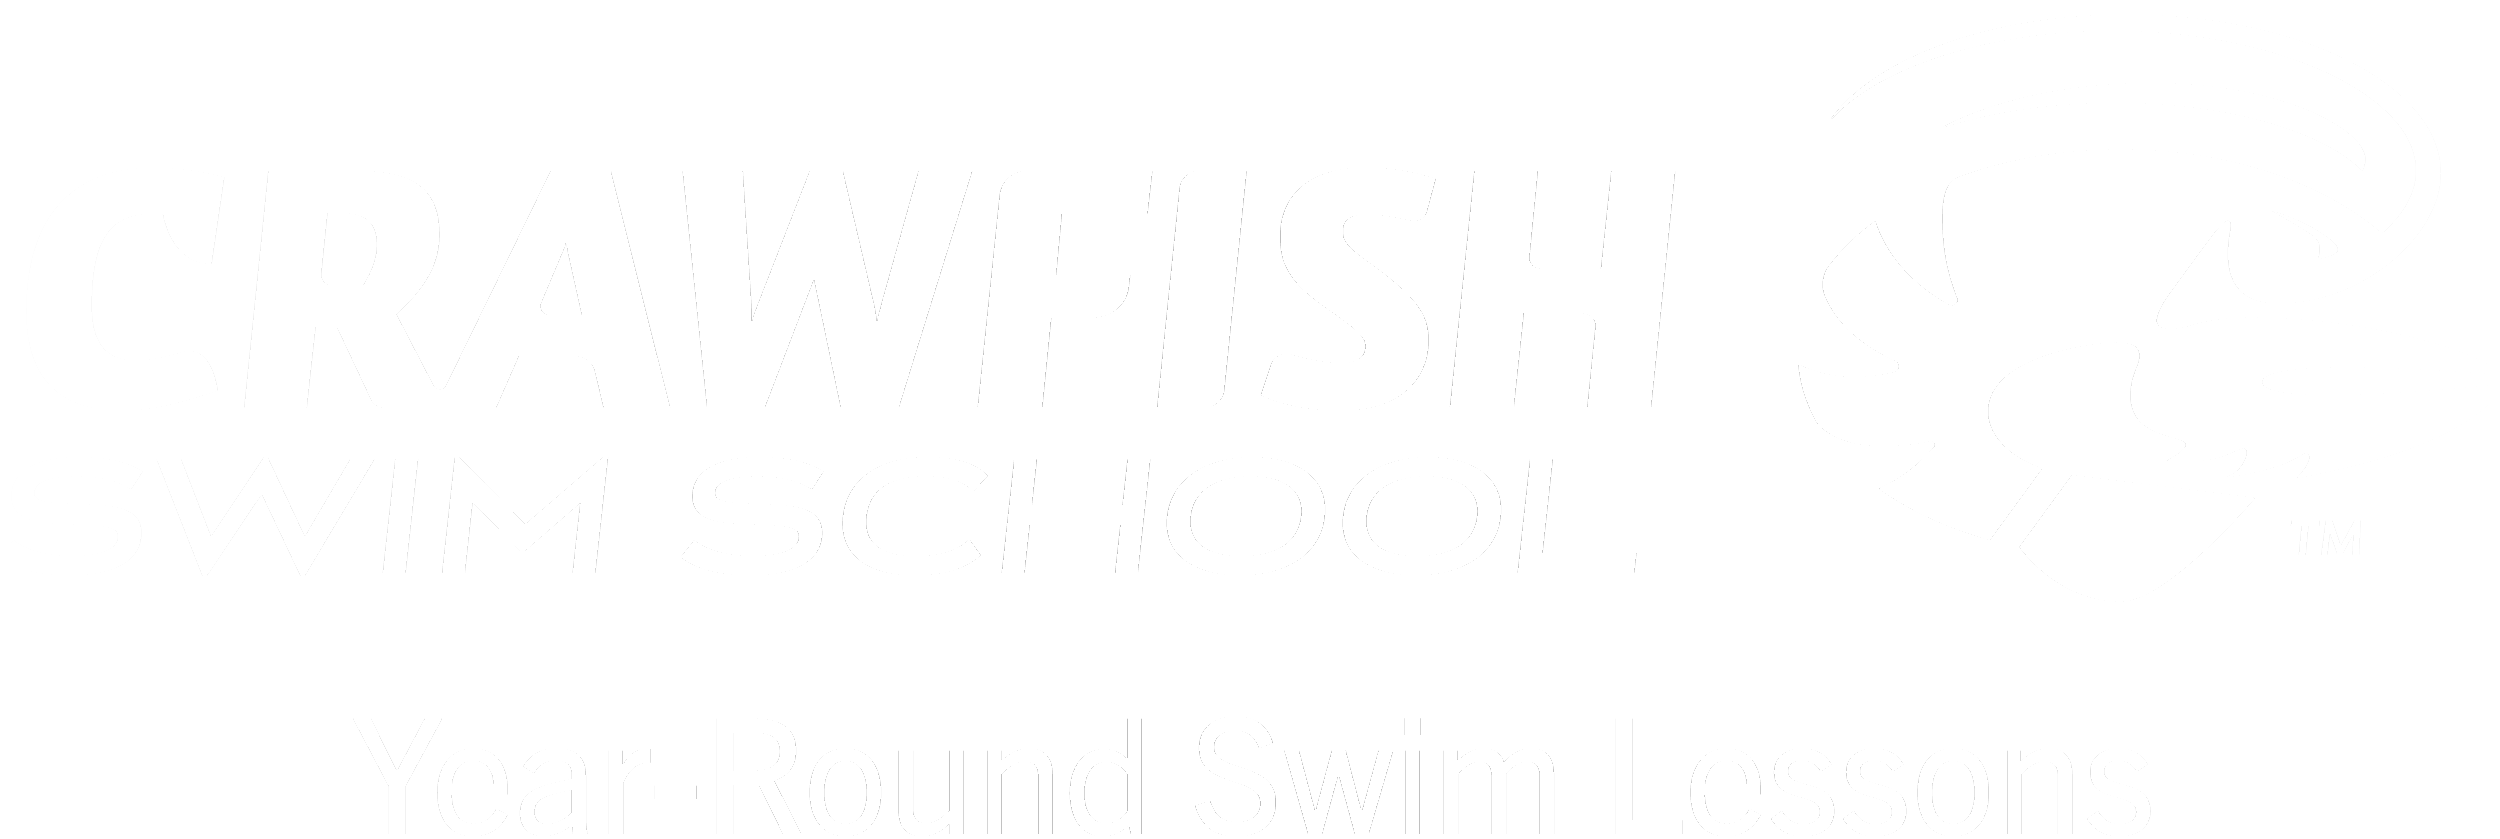 Crawfish Swim School - Year-Round Swim Lessons